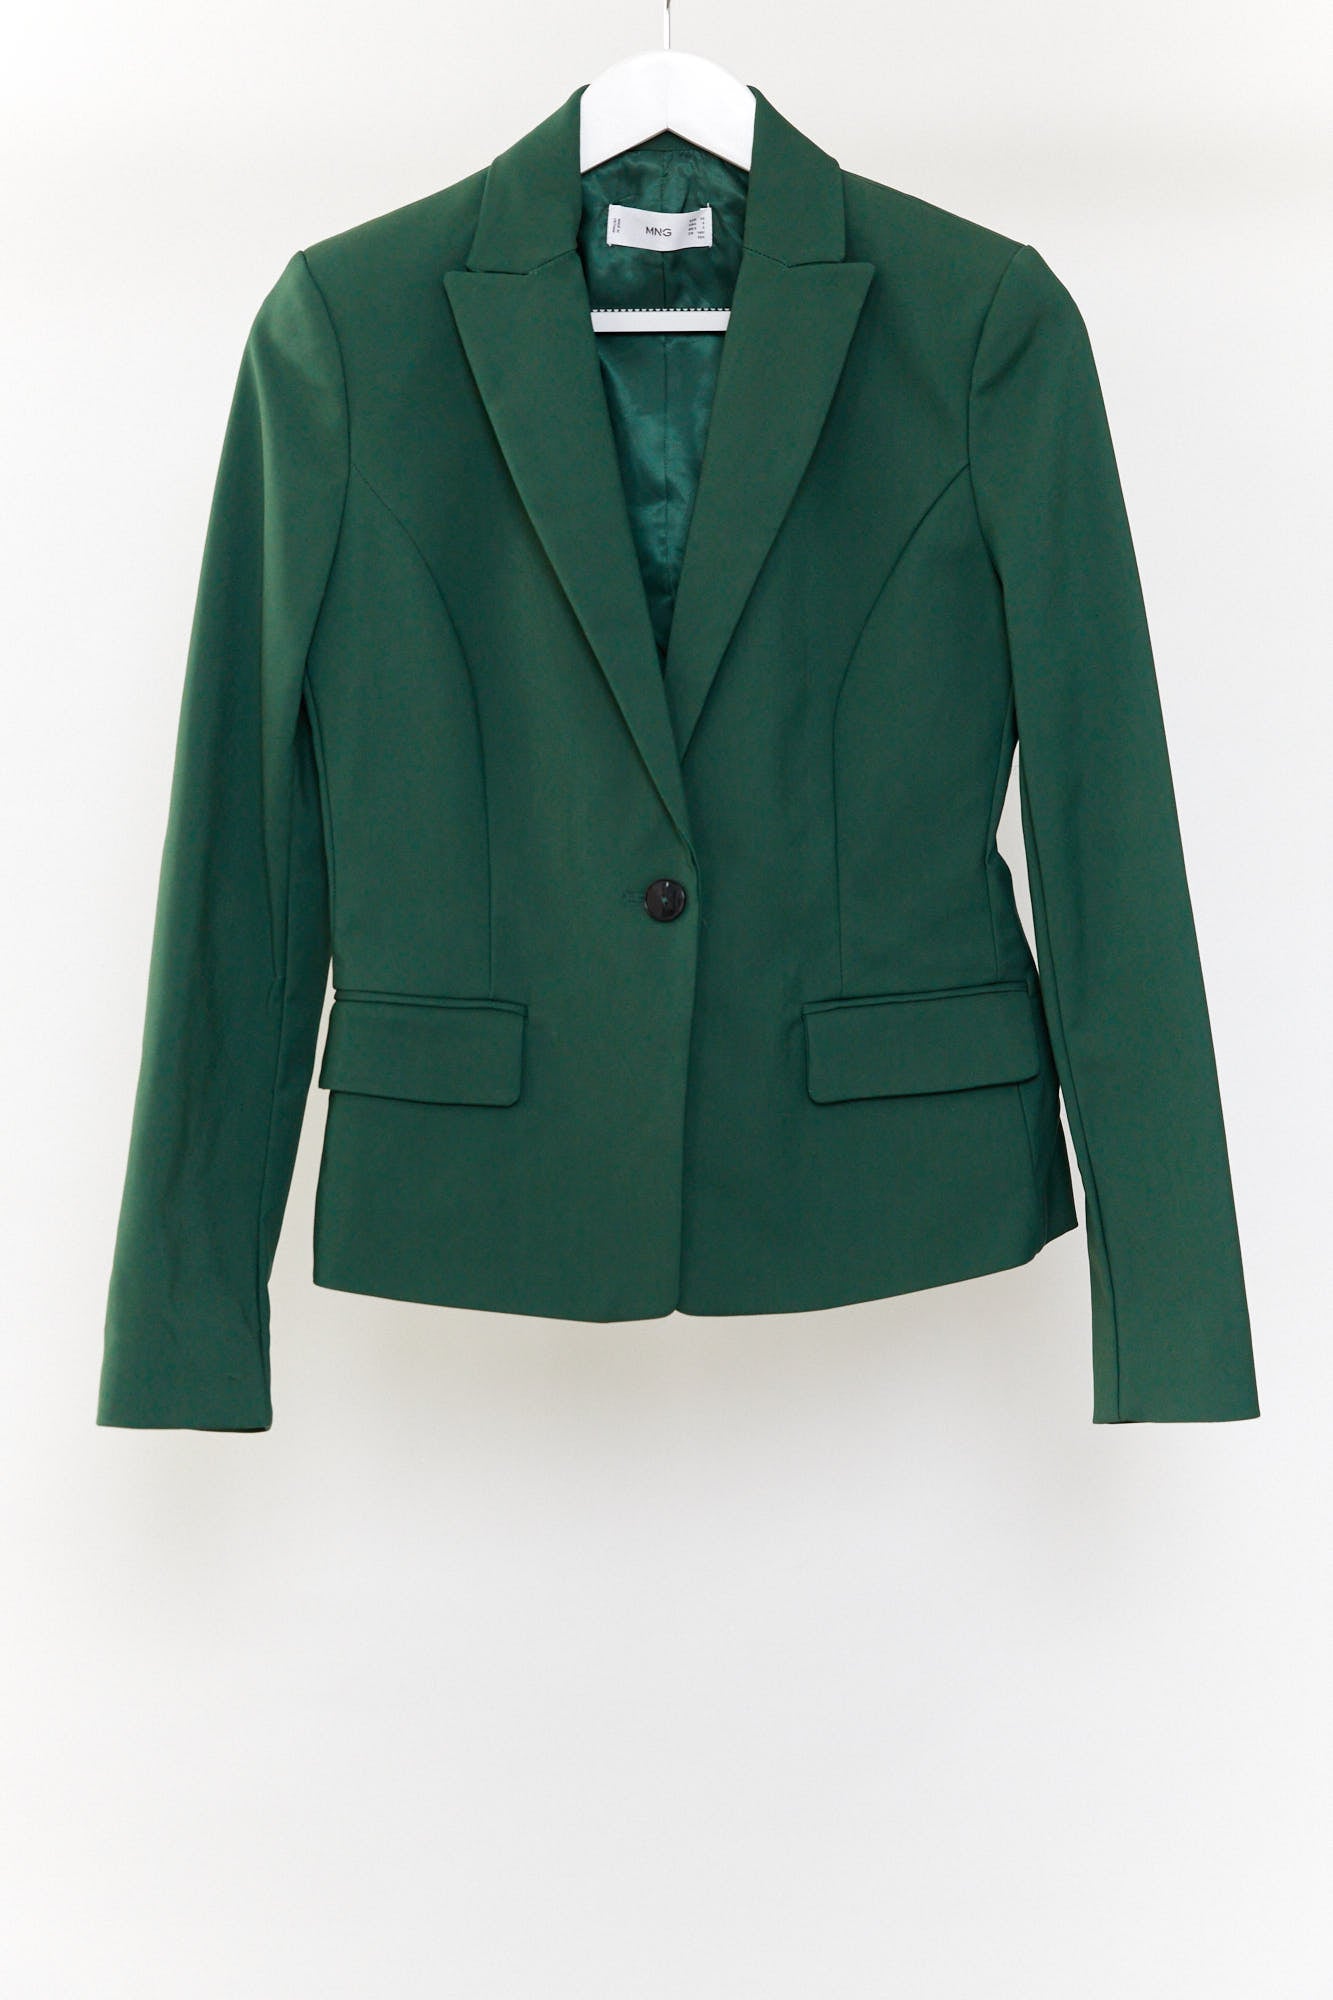 Womens Mango green suit jacket size 10